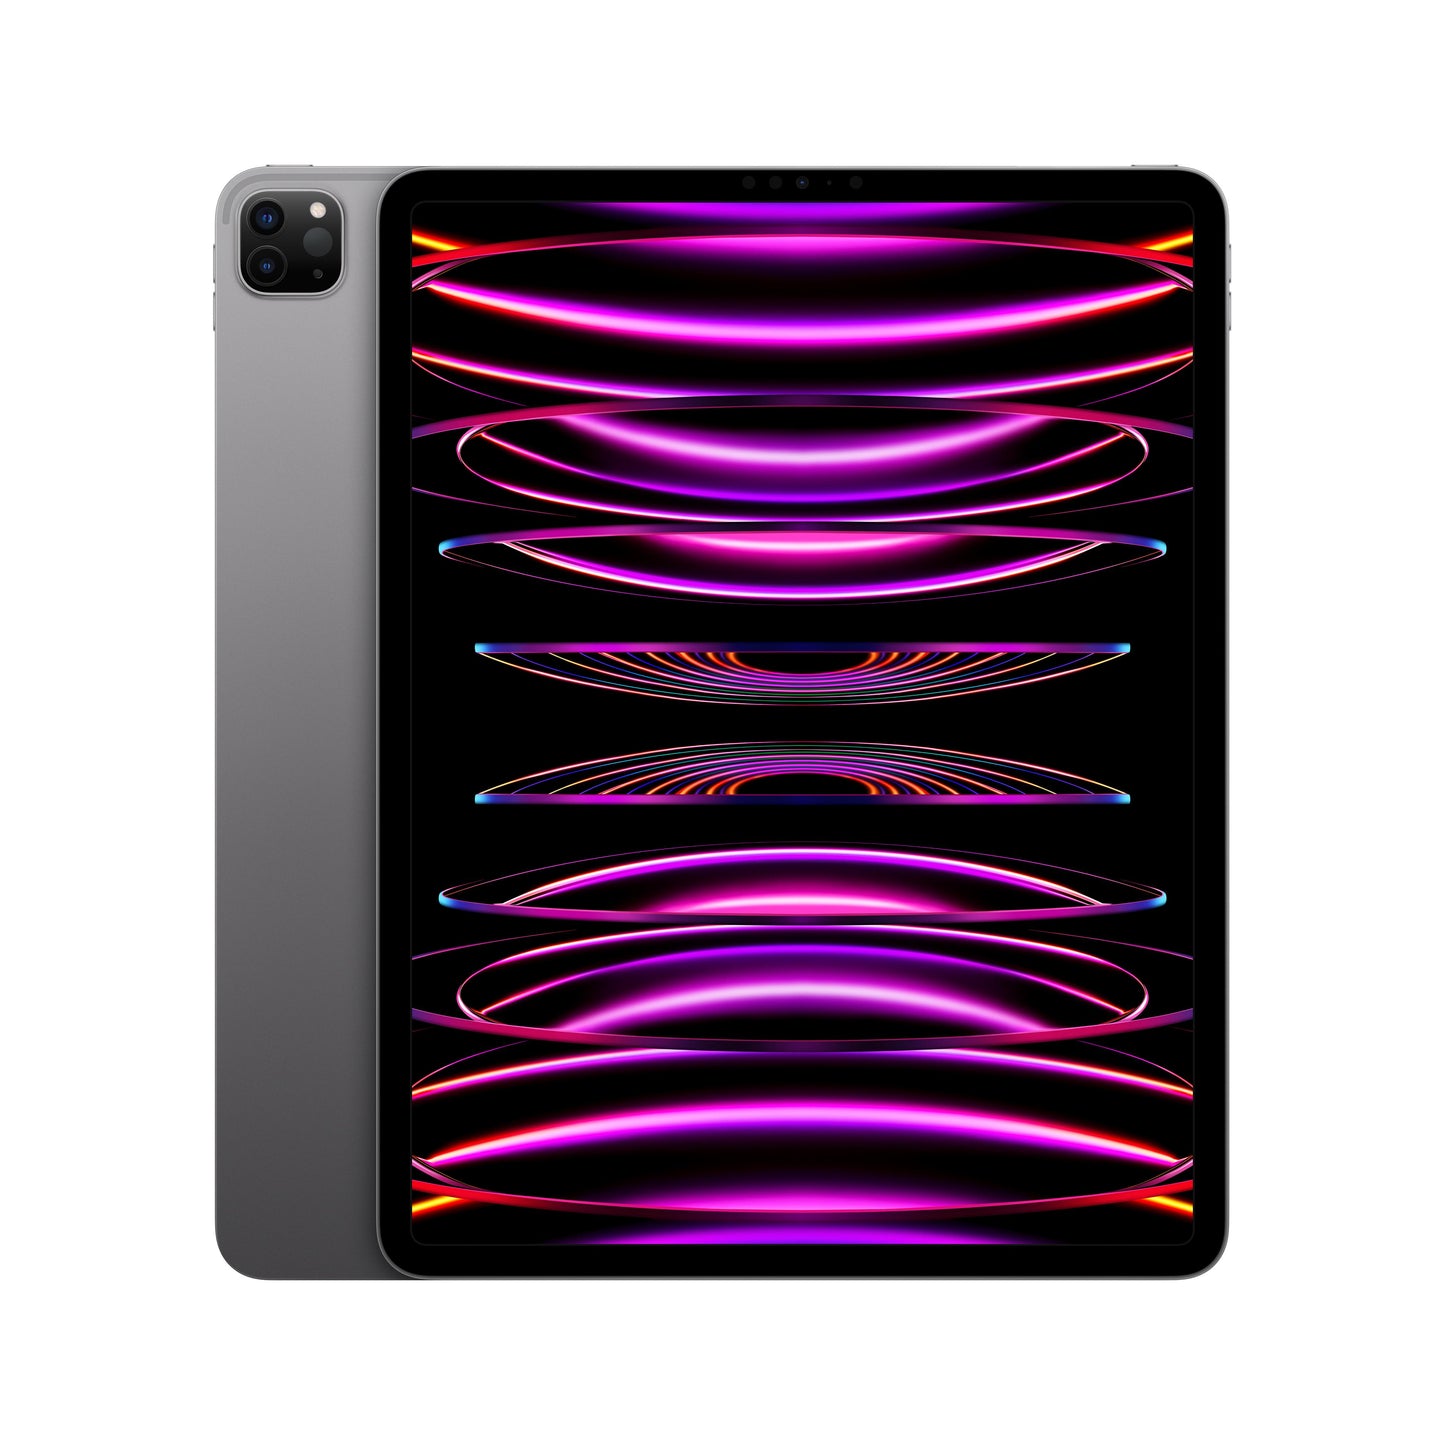 2022 12.9-inch iPad Pro Wi-Fi 1TB - Space Grey (6th generation)